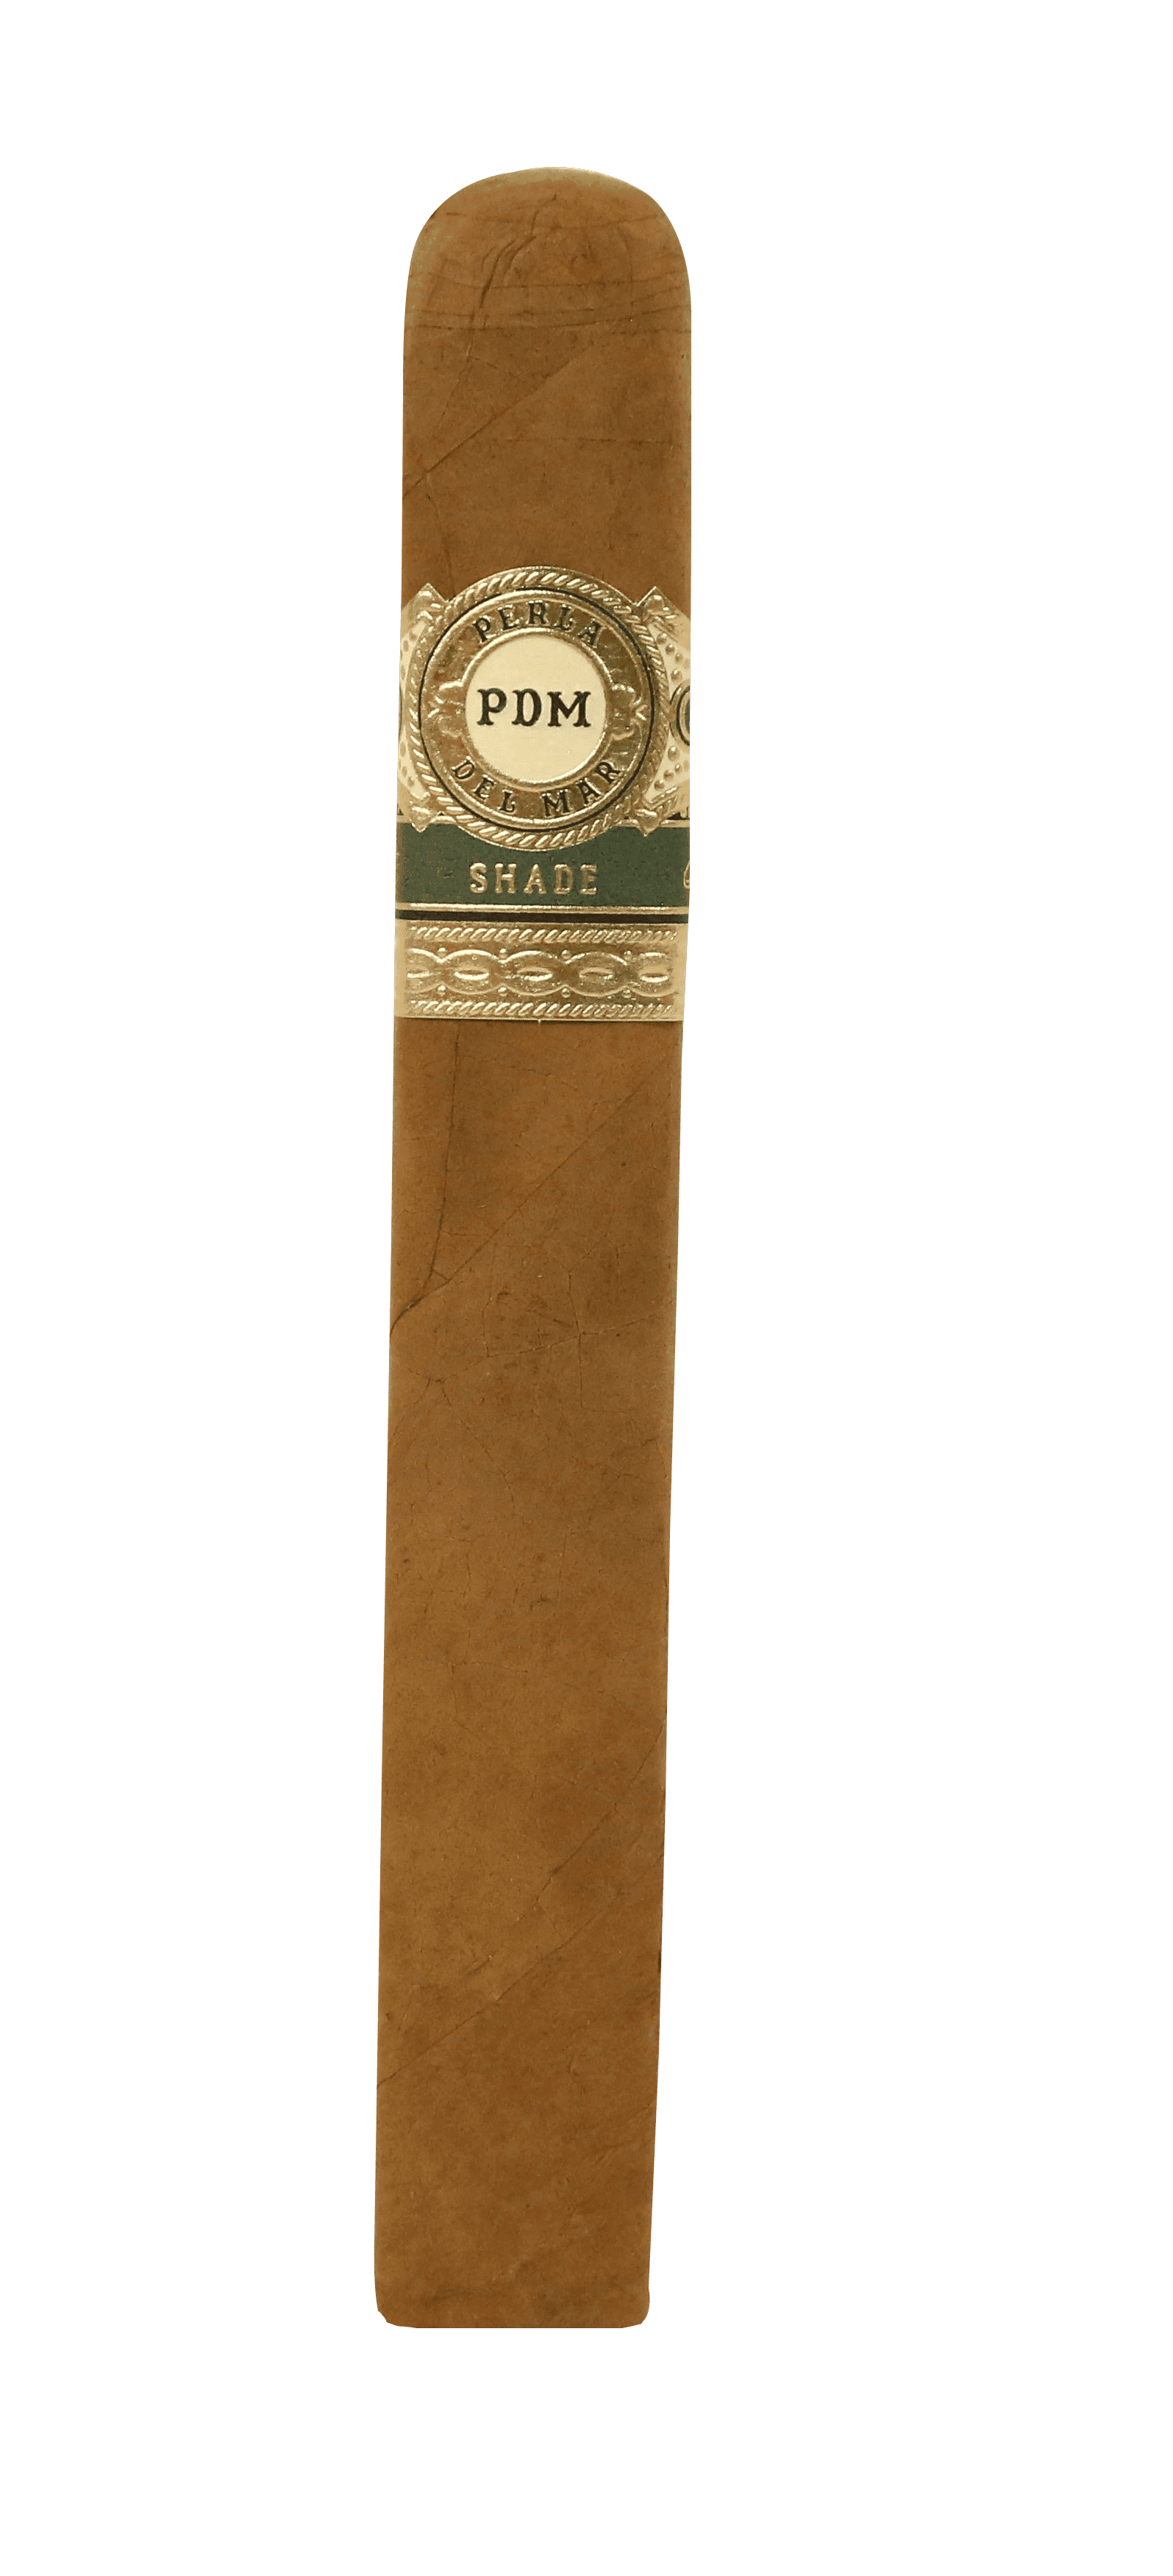 Single Perla Del Mar Shade Toro cigar